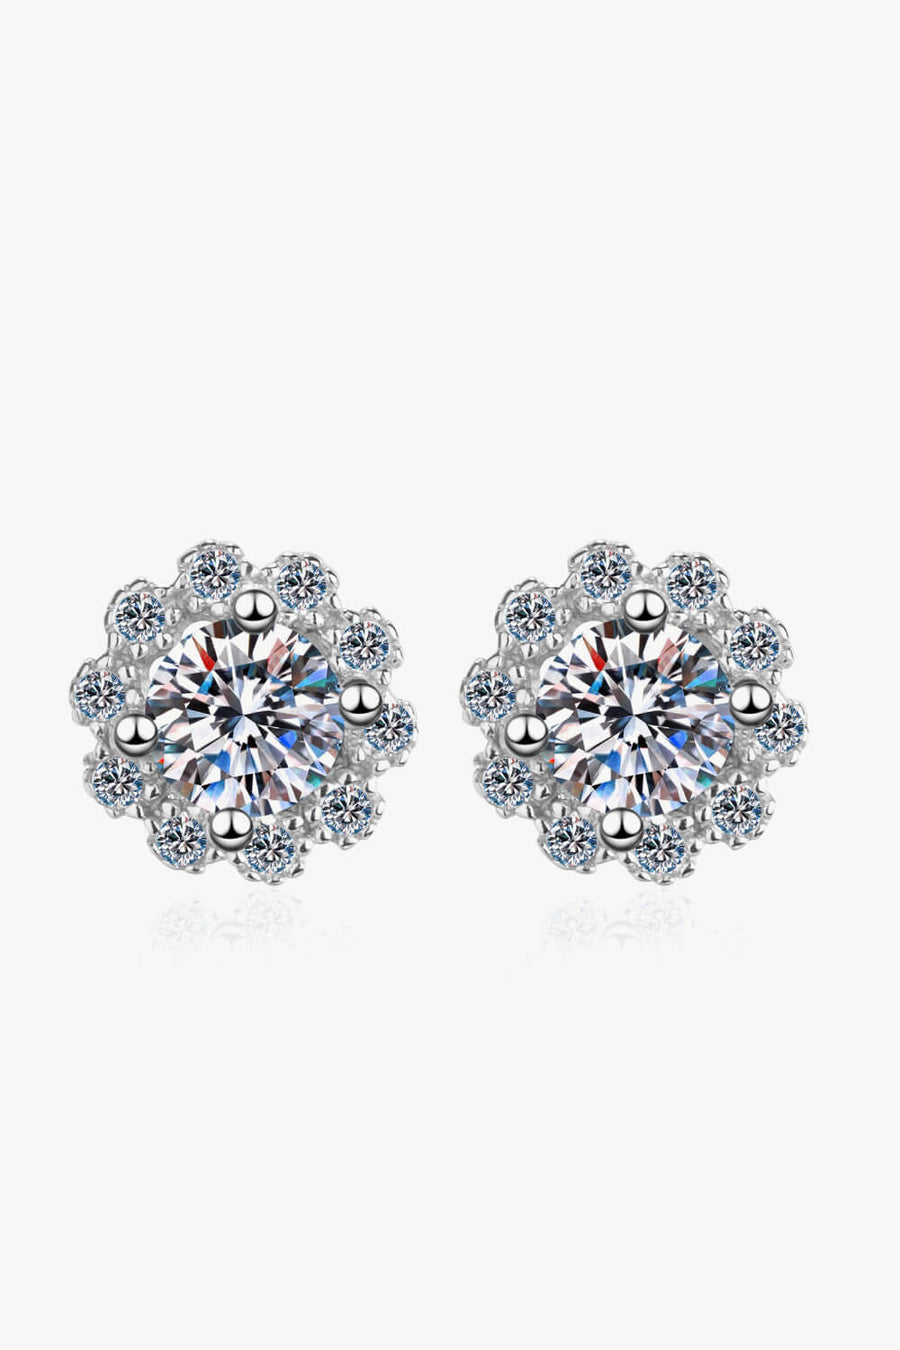 Best Diamond Jewelry Bundle Set Gift | Best Floral Diamond Necklace, Earrings, Bracelet Jewelry Gift for Women, Mother, Wife, Daughter | MASON New York